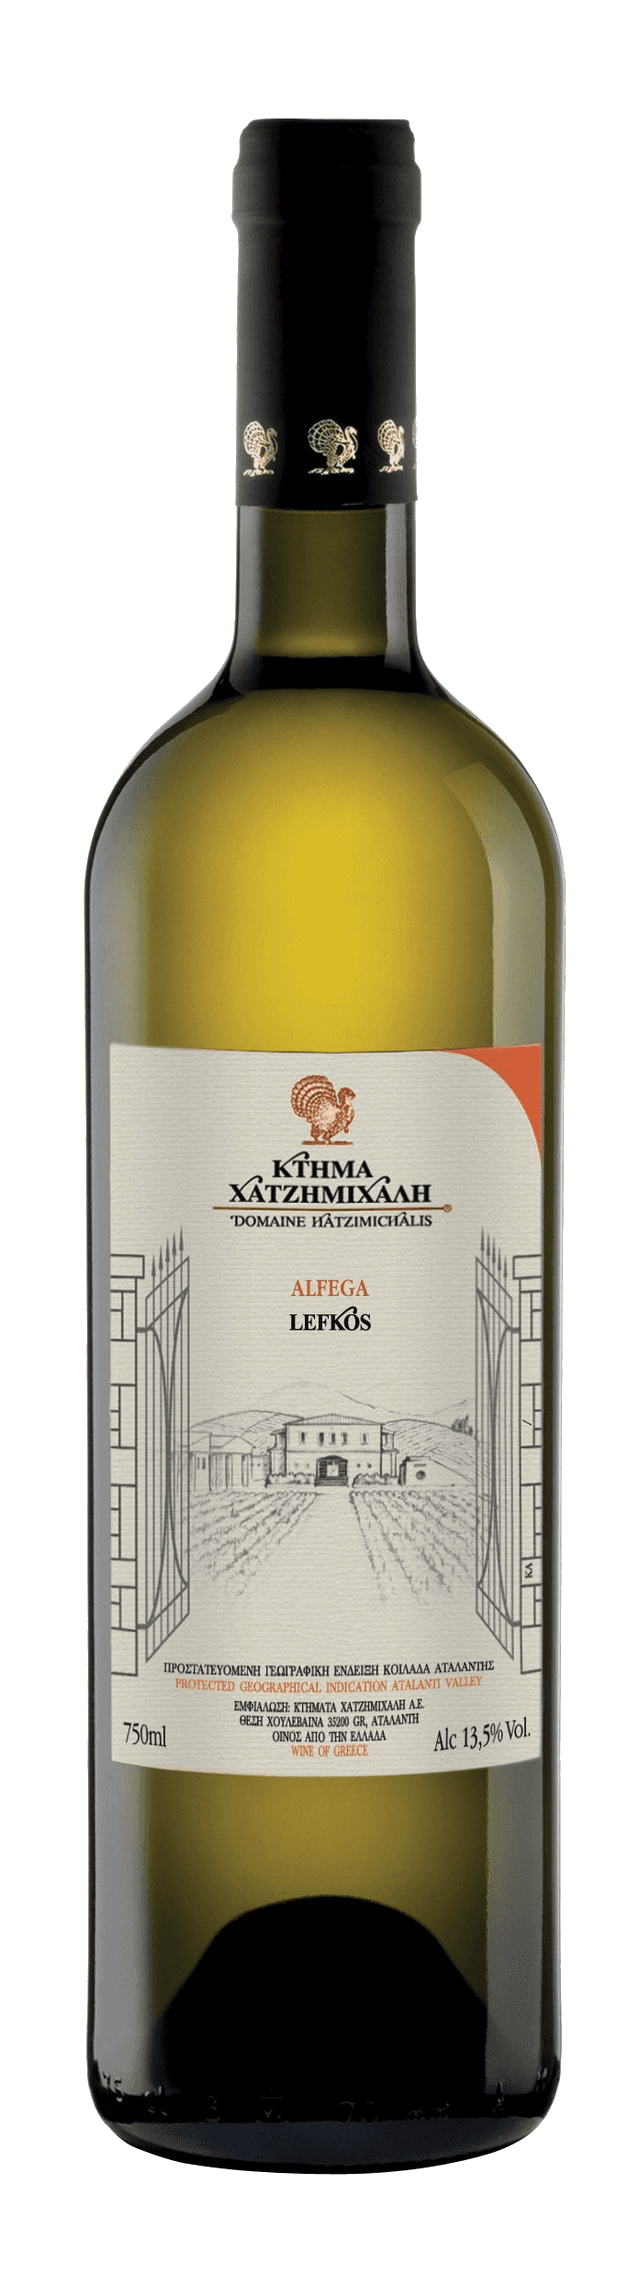 Hatzimichalis Ktima Shop-Kreta | Le ~ ( Weinversand Weine, Ouzo, Olivenöl Weiss Metaxa, Blanc Lefkos )